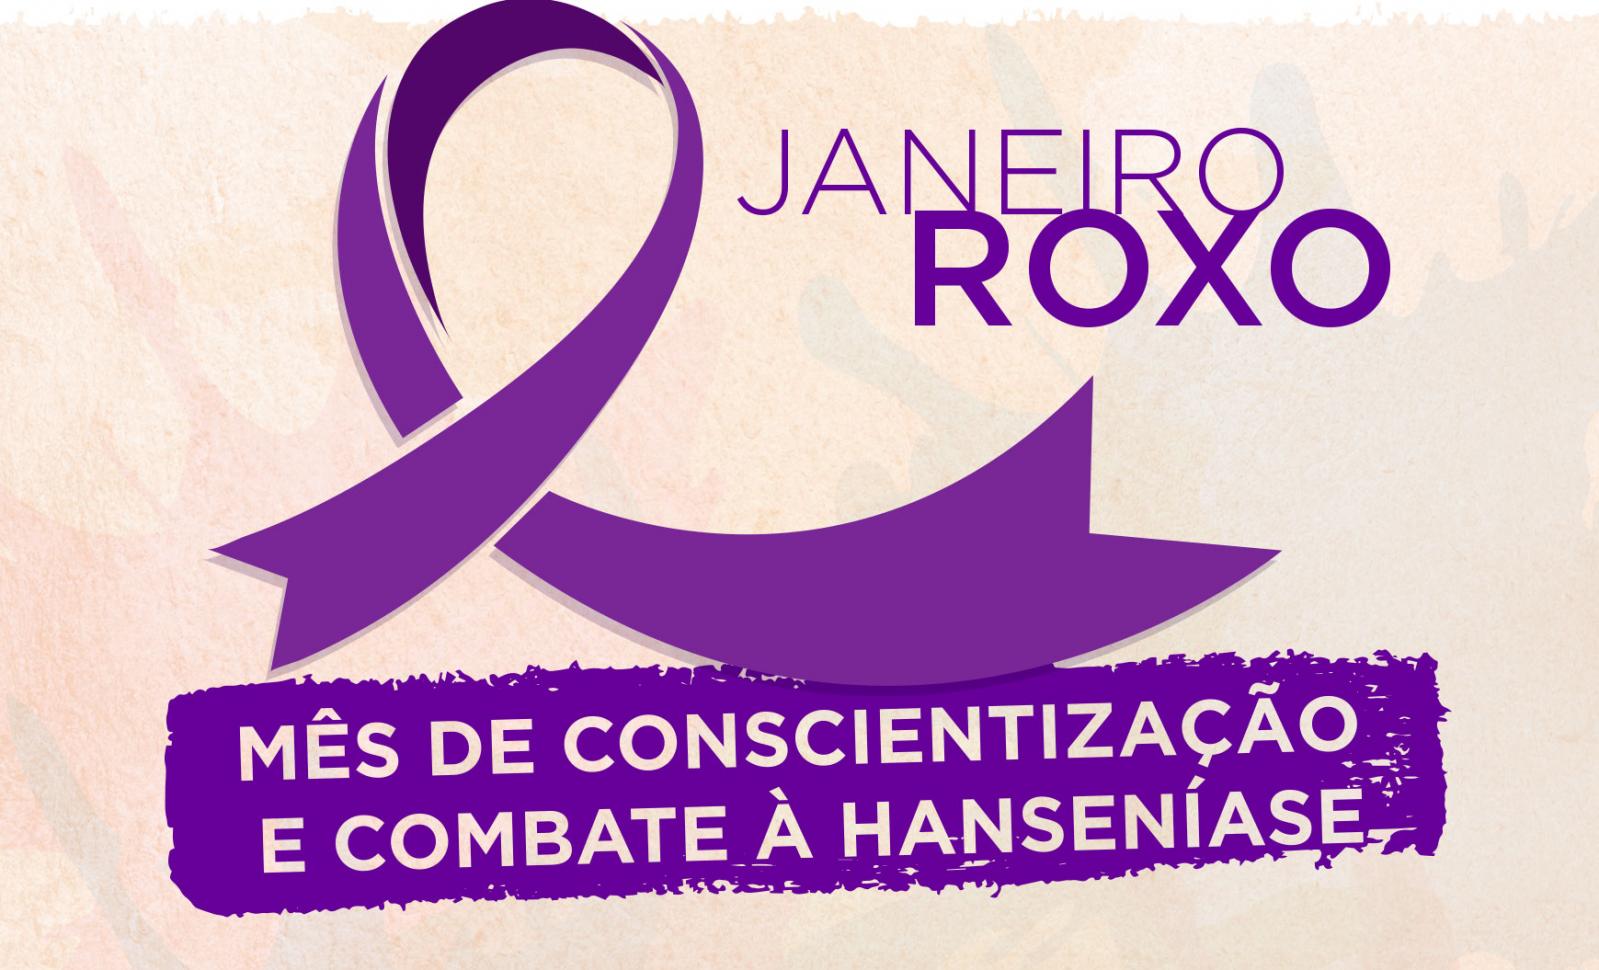 Janeiro Roxo advierte sobre diagnóstico y tratamiento de la lepra – Jornal Araxá